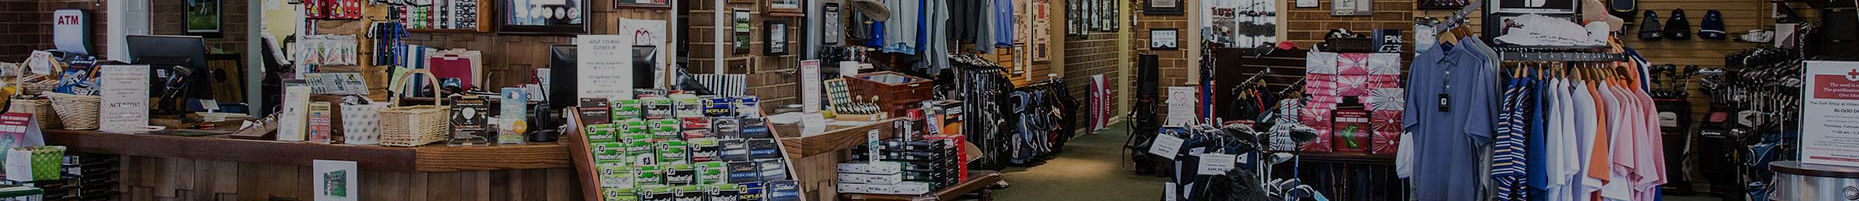 golf shop merchandise